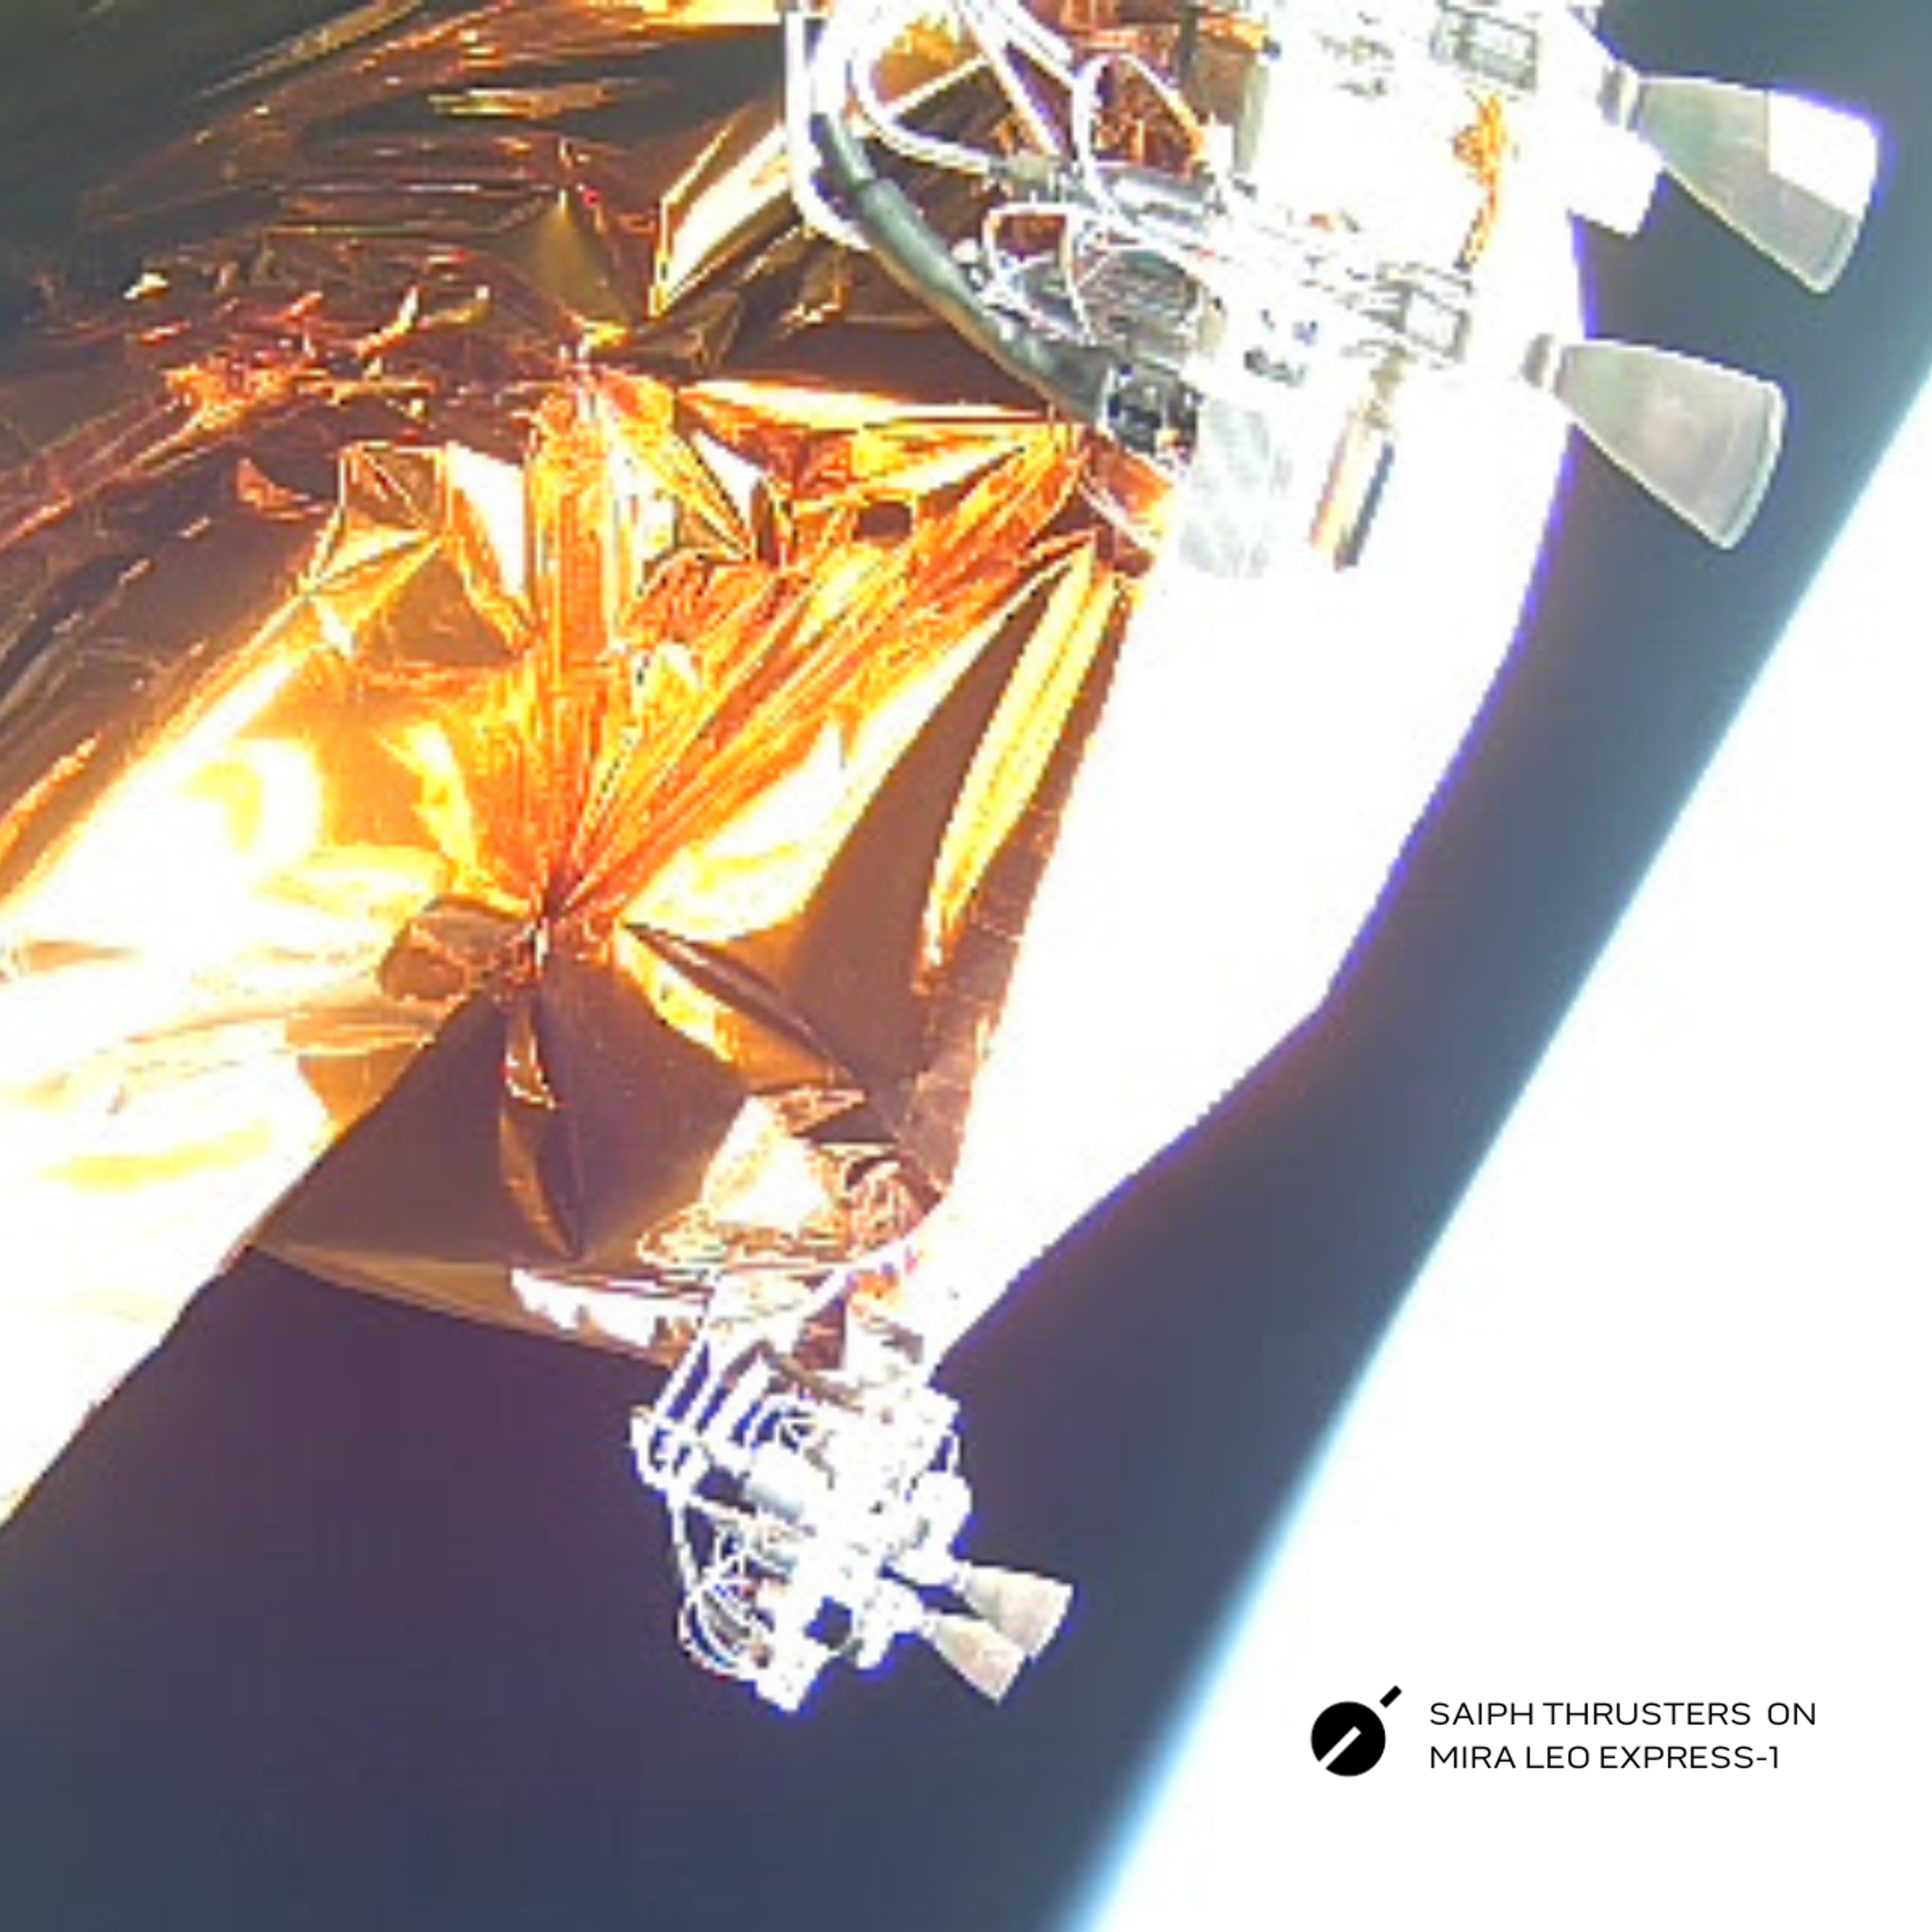 Saiph thrusters on Mira LEO Express-1